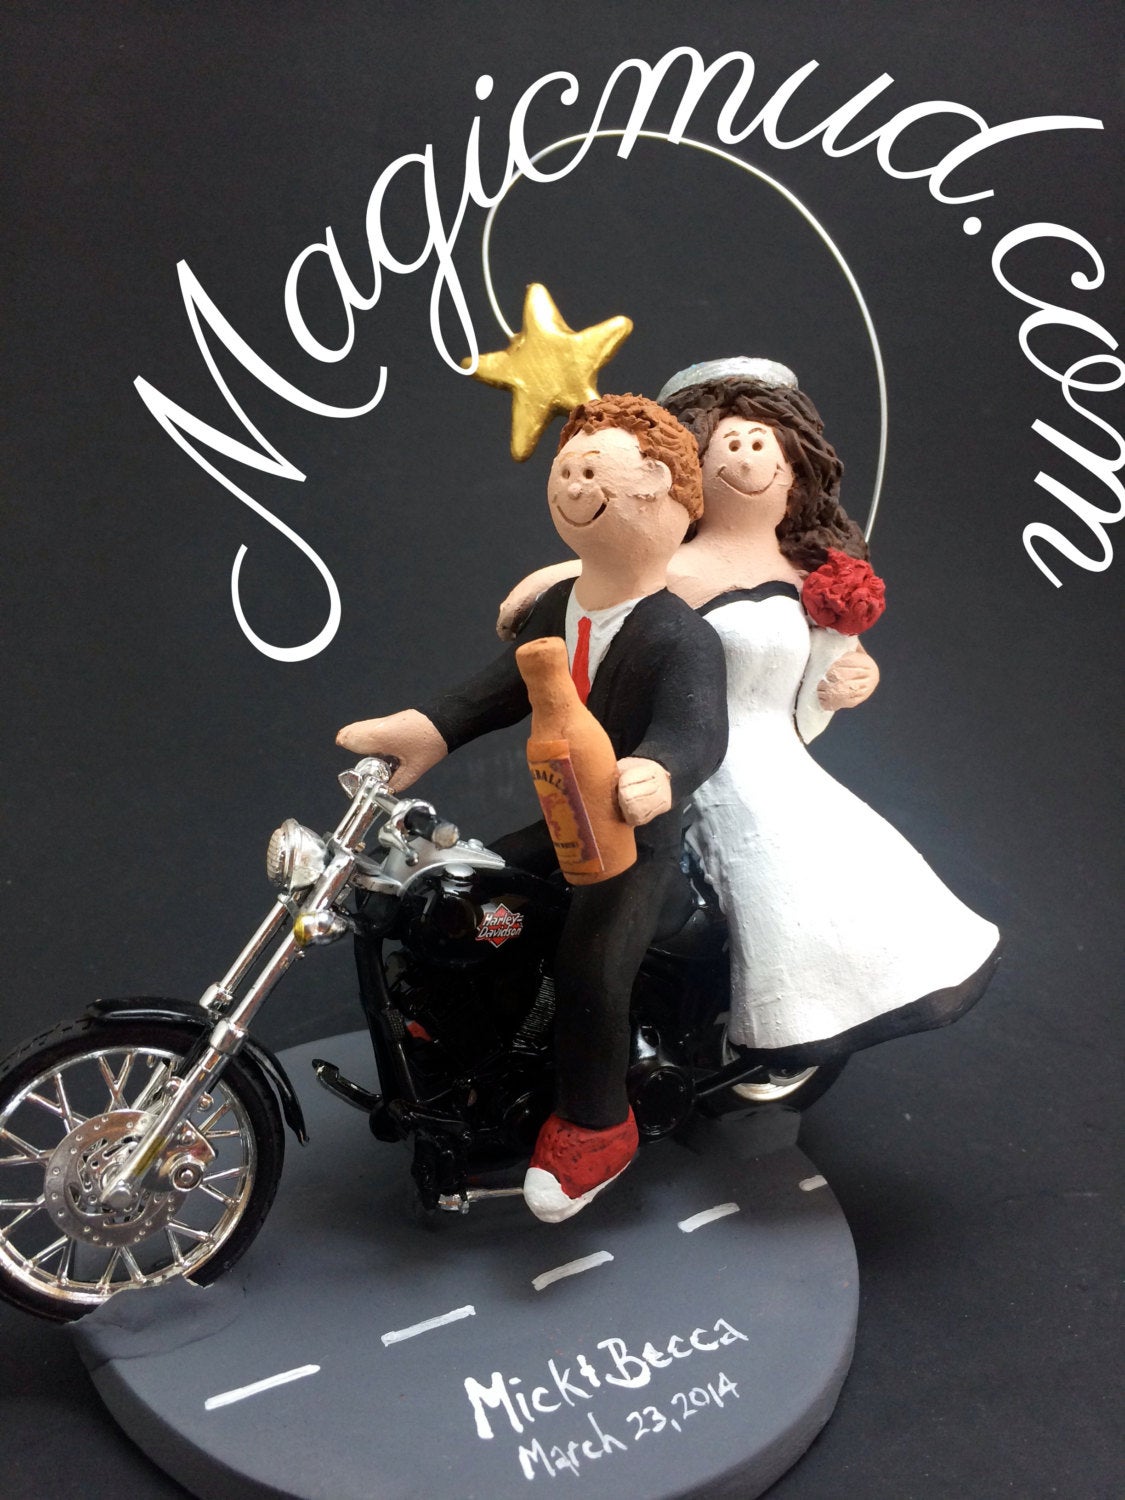 Goateed Groom on a Harley Wedding Cake Topper, Harley Wedding Anniversary Gift/Cake Topper, Motorcycle Bride and Groom Wedding Cake Topper. - iWeddingCakeToppers